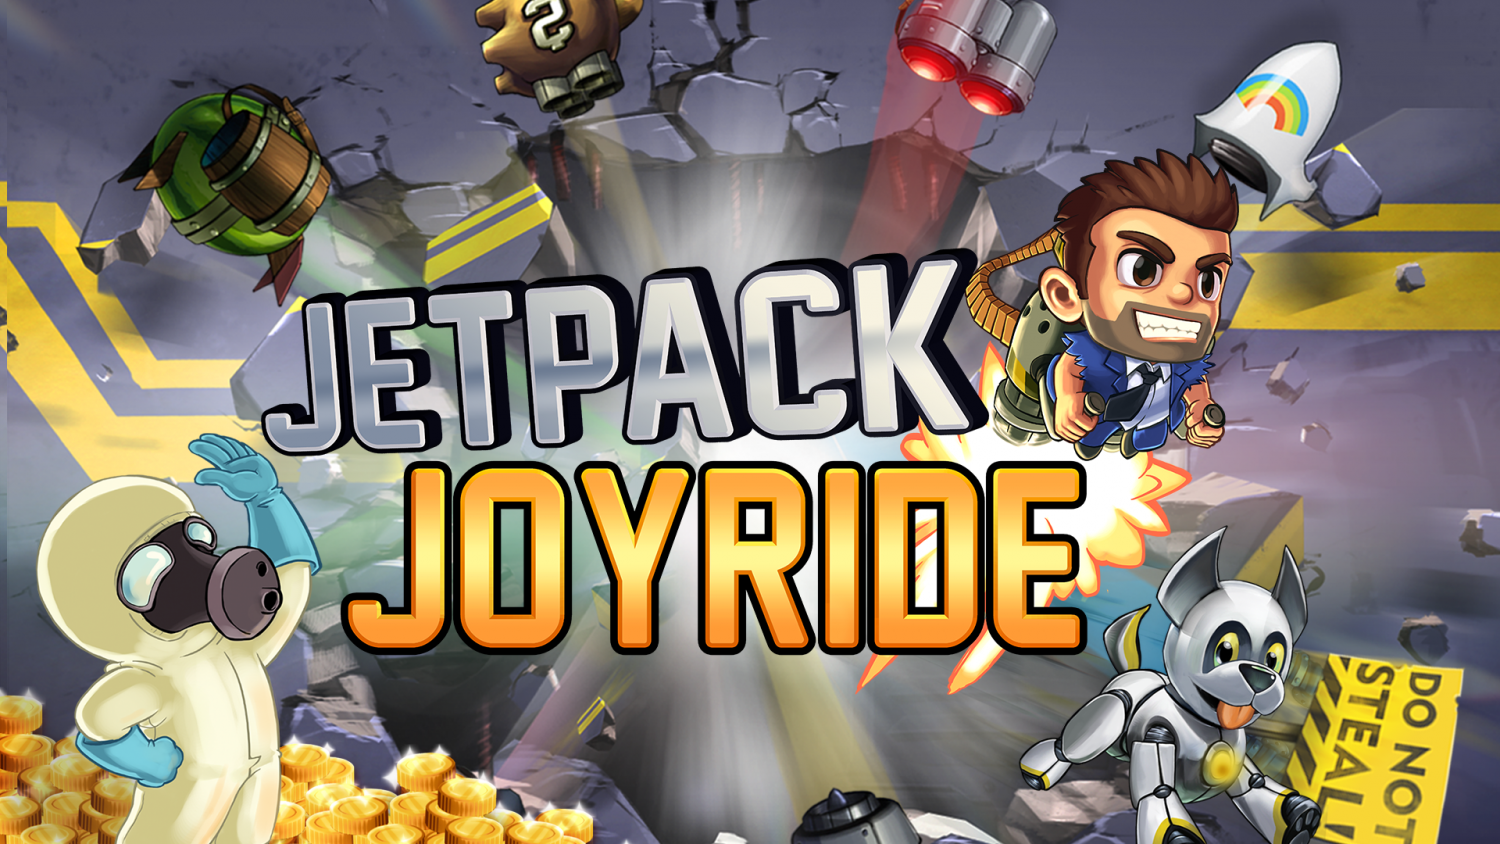 Jetpack Joyride Review